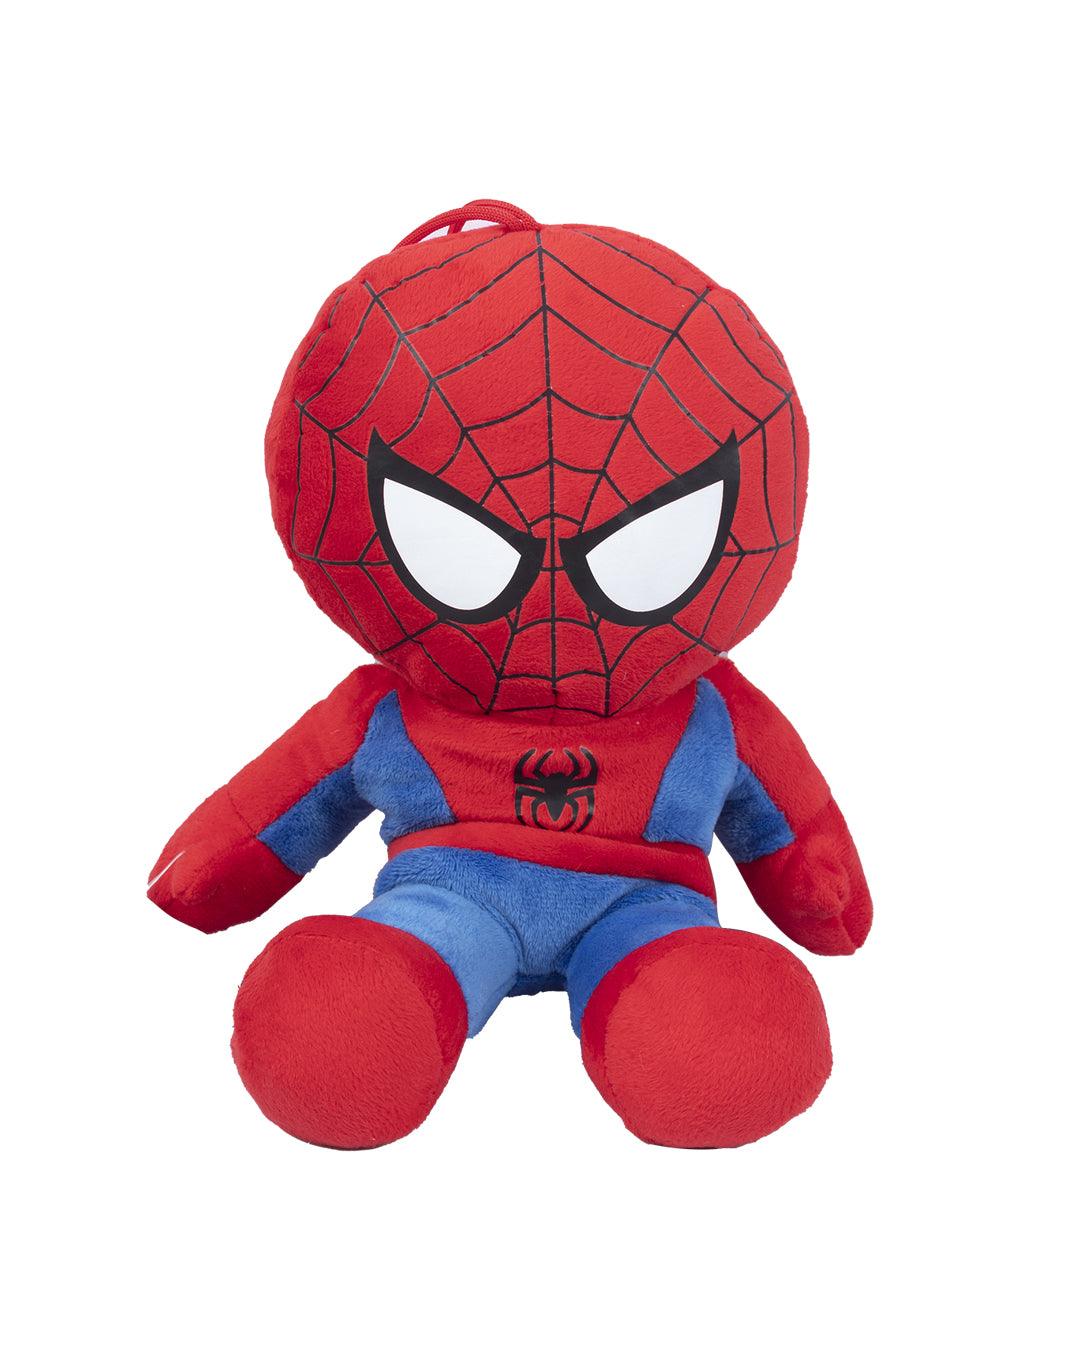 DIMPY STUFF Spiderman Stuffed Soft Toy (30 Cm, Red & Blue) - Plush Toy - MARKET 99